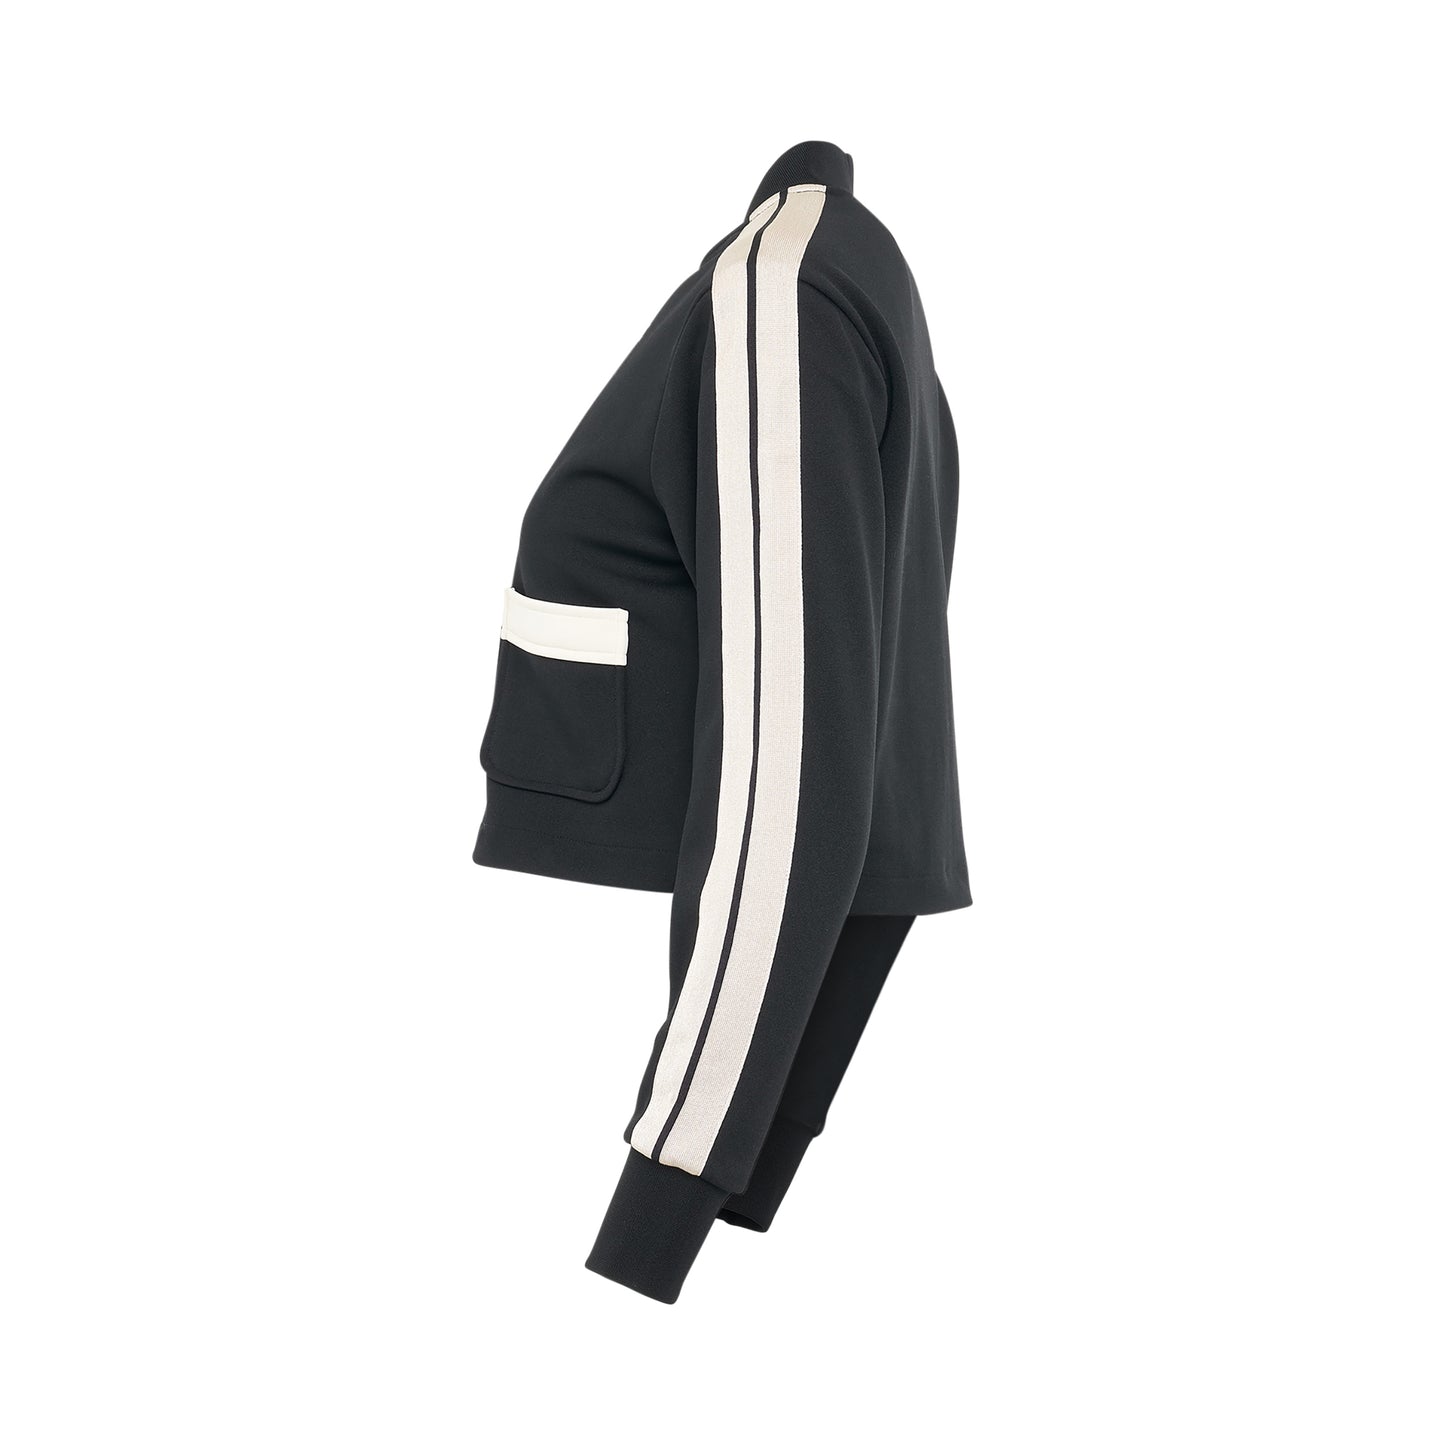 Stripe-Pocket Track Jacket in Black/Off White